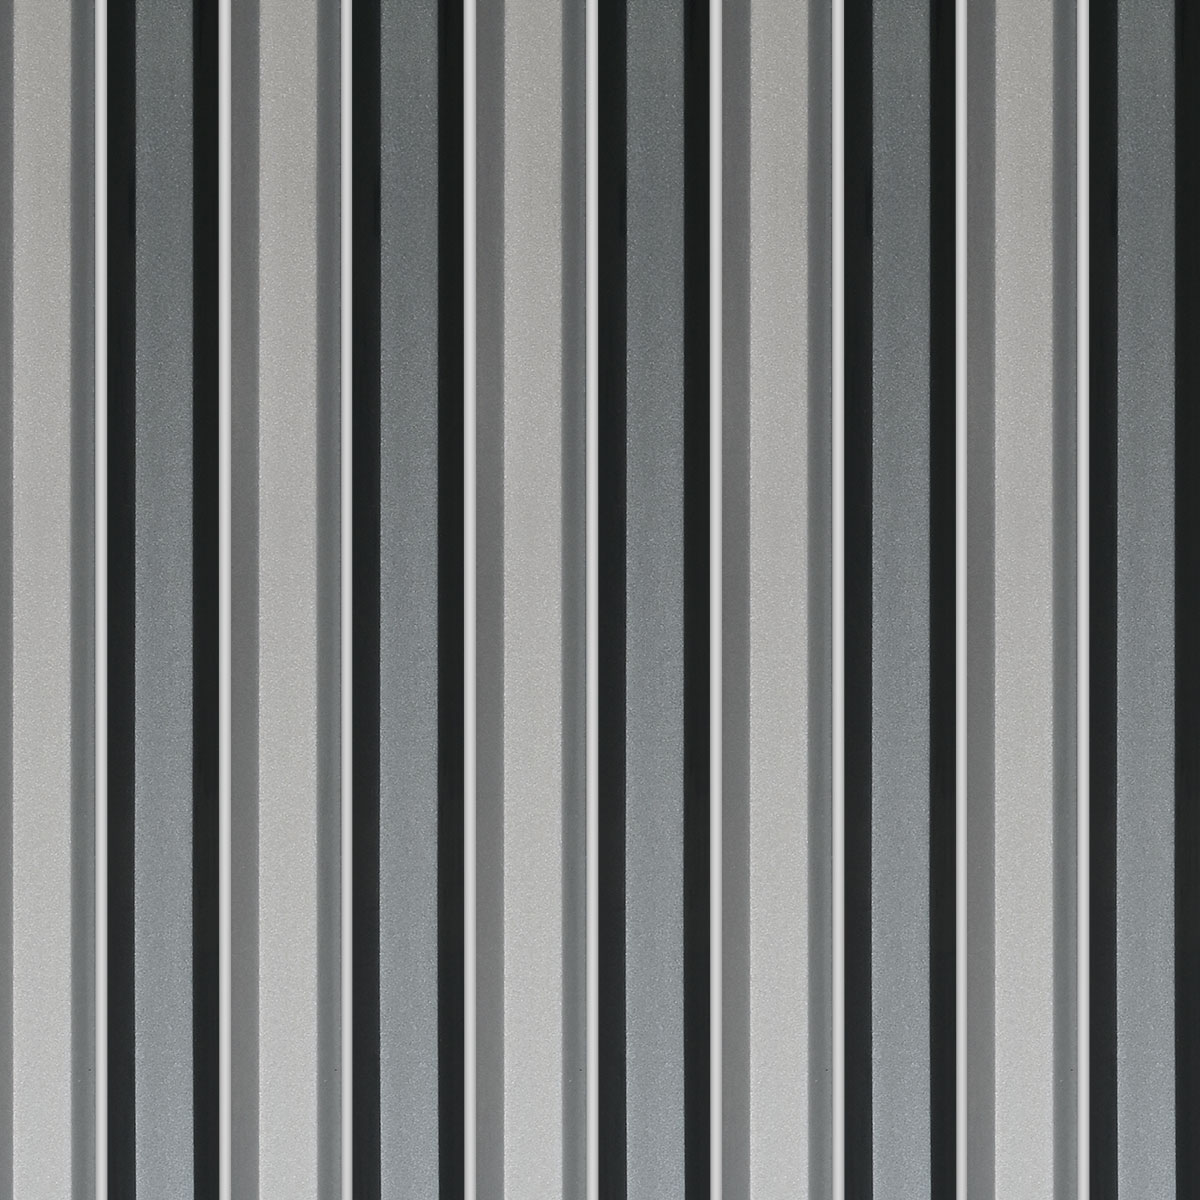 Modern Gray and Black Beveled Metallic Glass Backsplash Tile BA8020 9